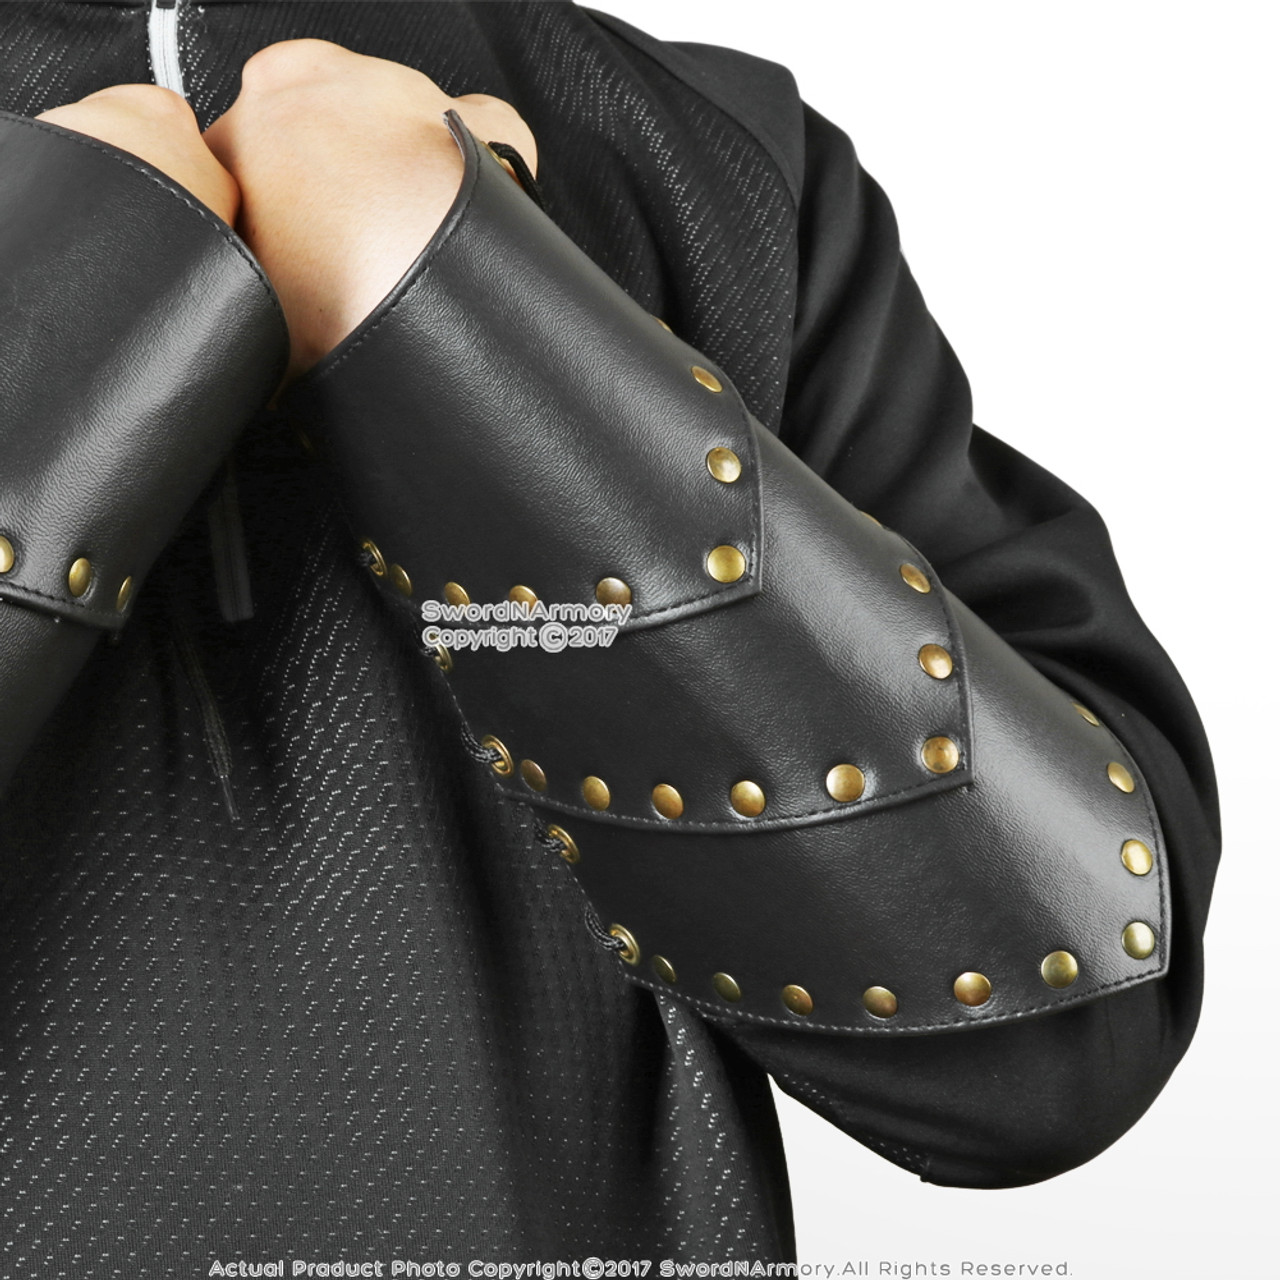 Generic Arm Guard Medieval Bracer Costume Props Black @ Best Price Online